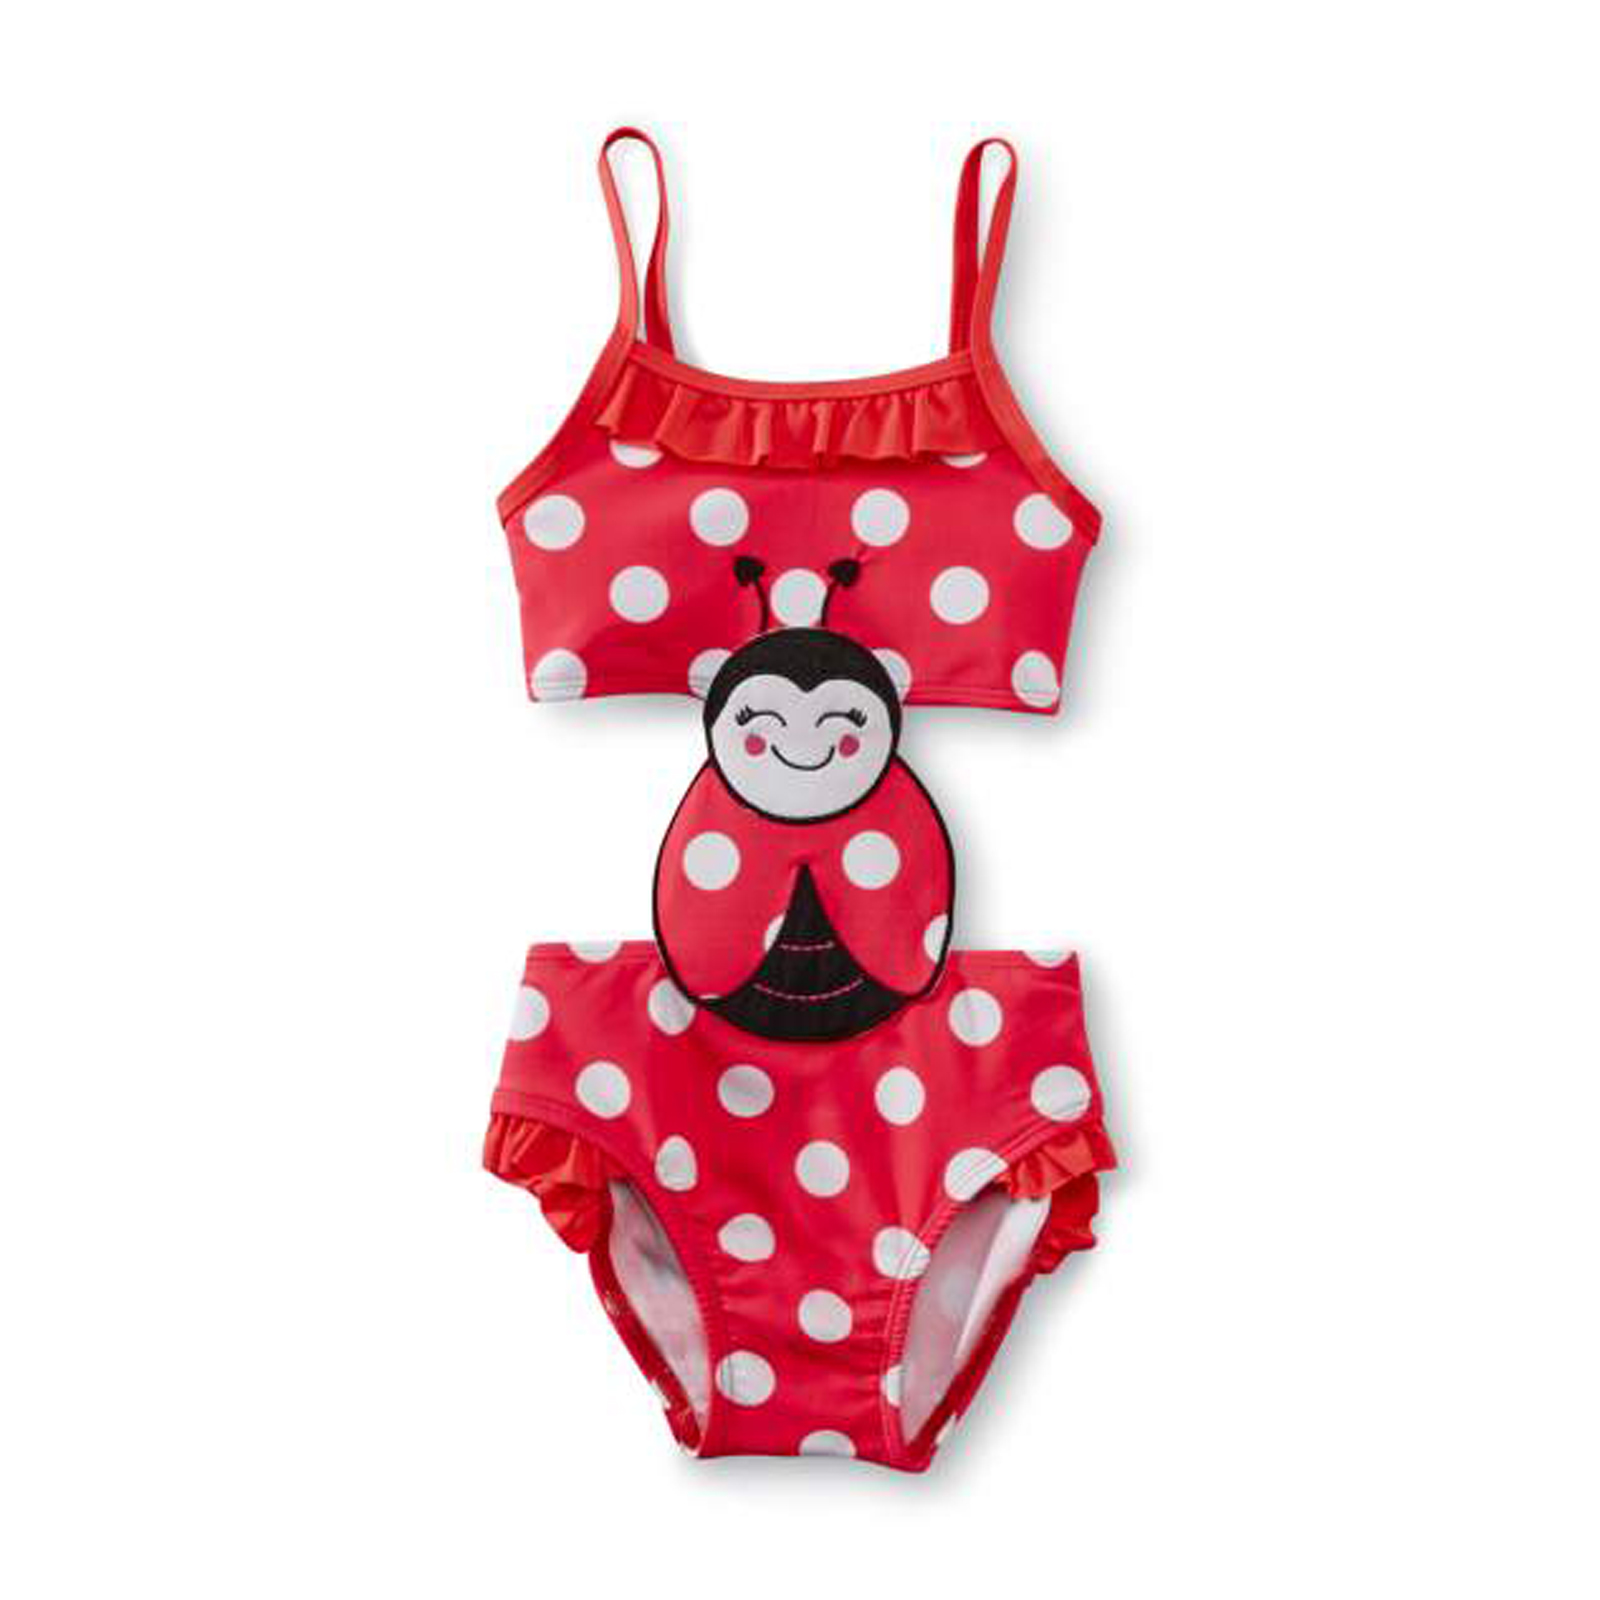 WonderKids Infant & Toddler Girl's Ladybug Monokini Swimsuit - Dots